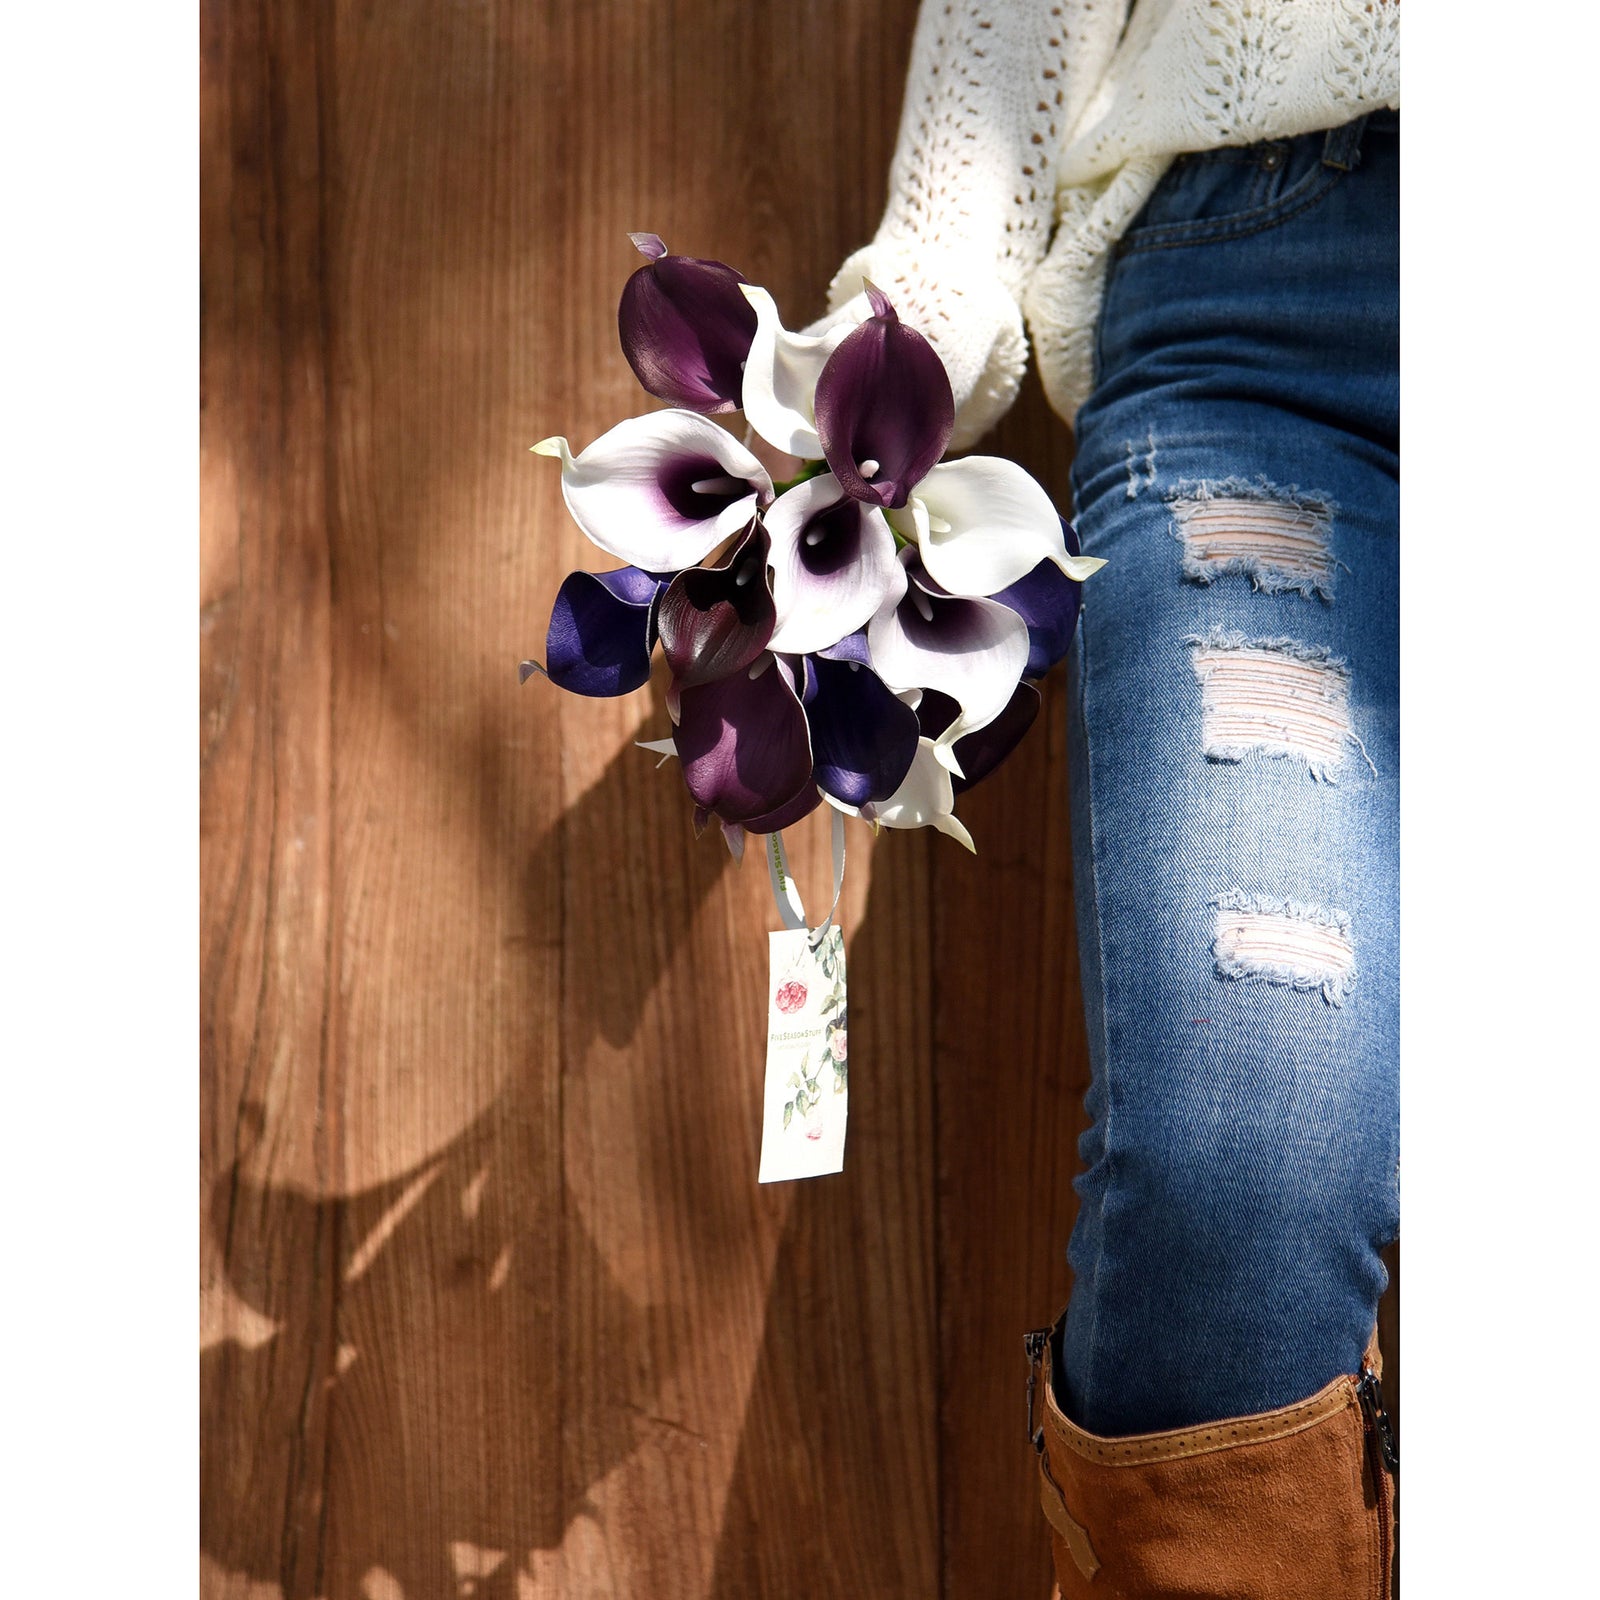 FiveSeasonStuff 15 Stems Real Touch (Purple Delight Mix) Calla Lilies Artificial Flower Bouquet, Wedding, Bridal, Home Décor DIY